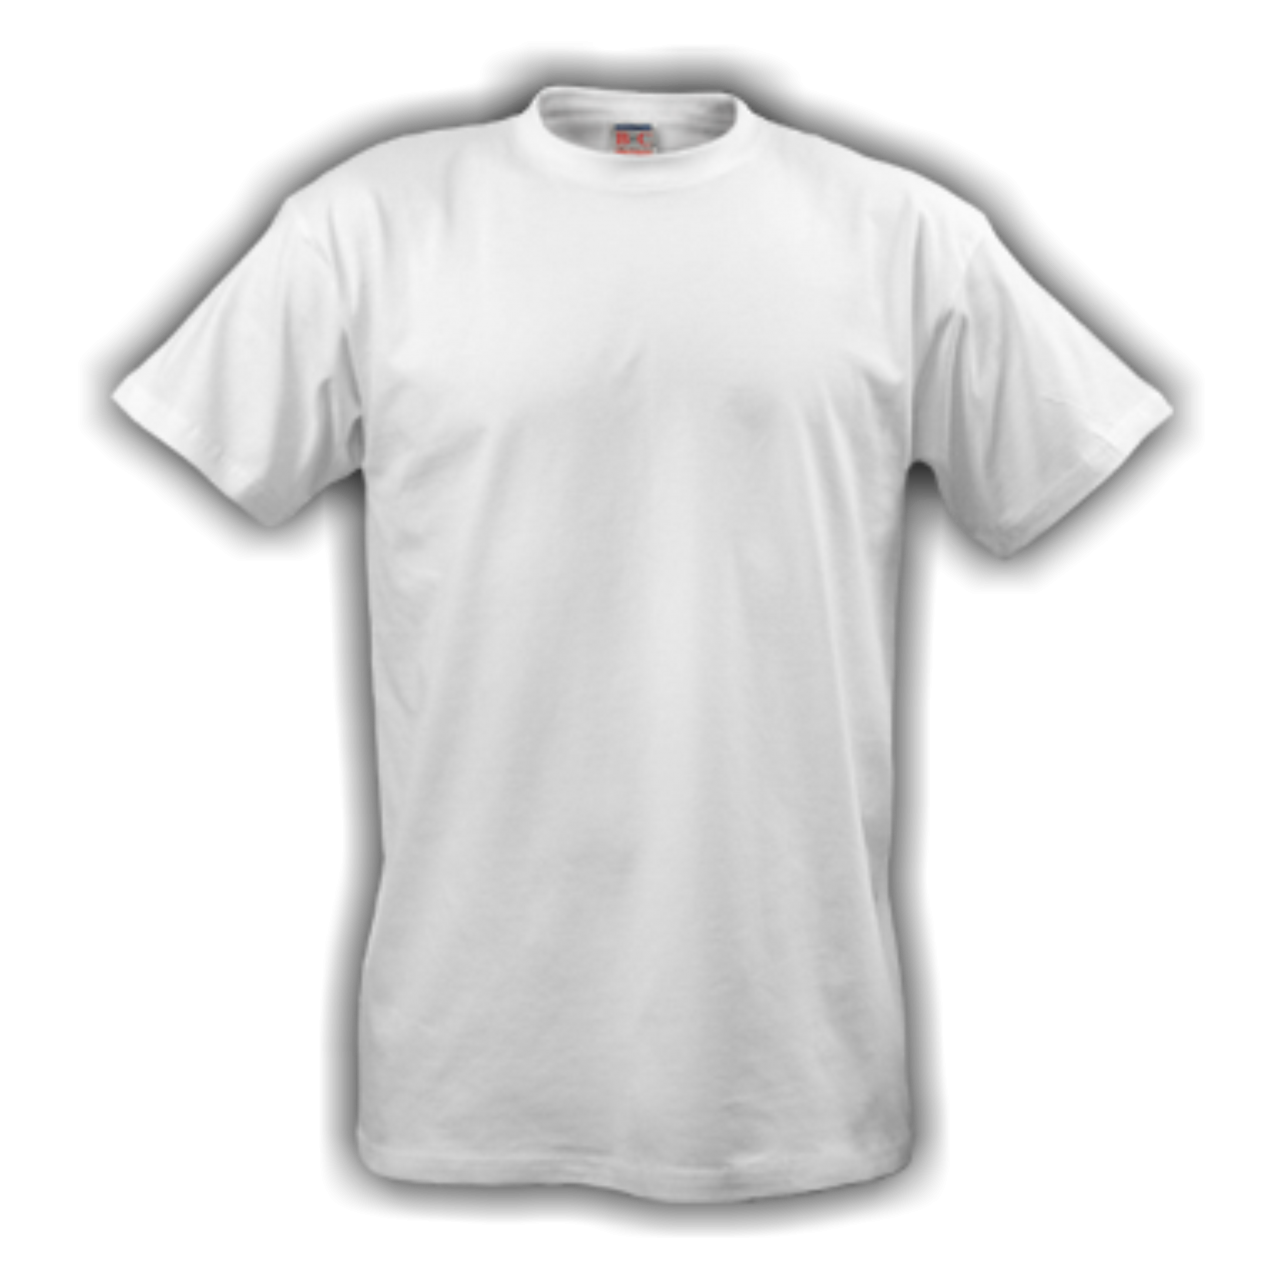 Download White T-Shirt PNG Image - PurePNG | Free transparent CC0 ...